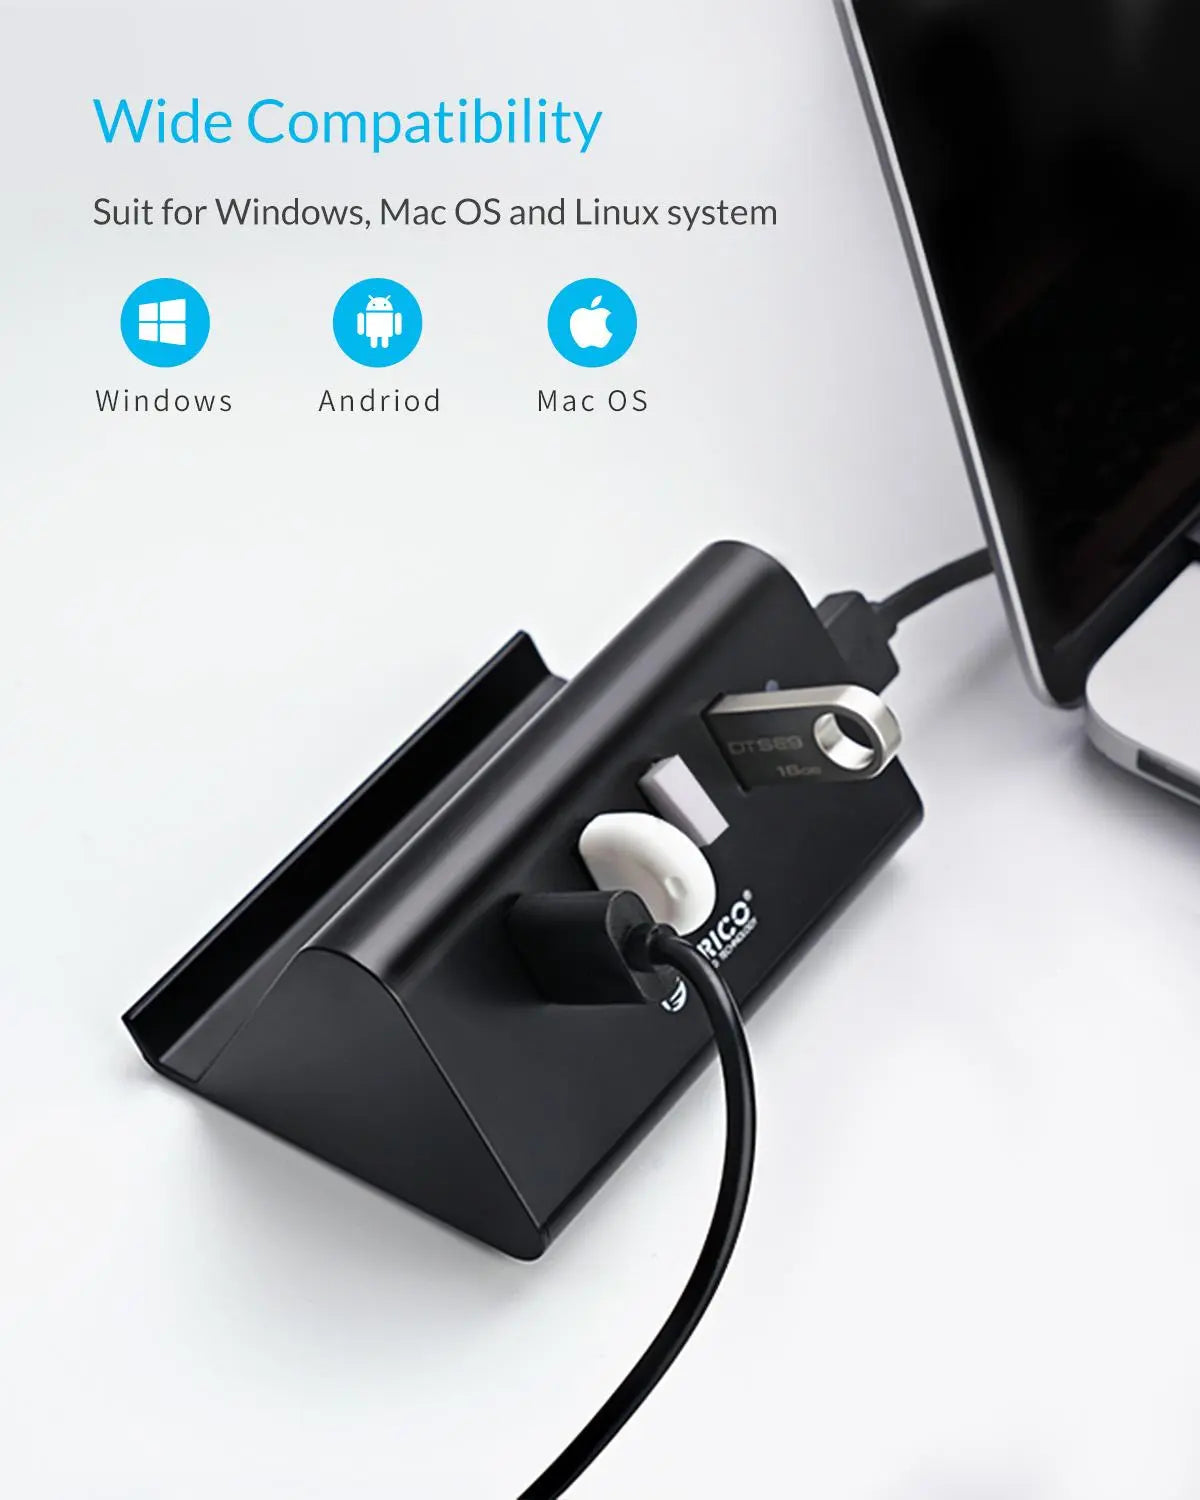 ORICO 5Gbps High Speed Mini 4 ports USB3.0 HUB Splitter for Desktop Laptop with Stand Holder for Phone Tablet PC - Black / White